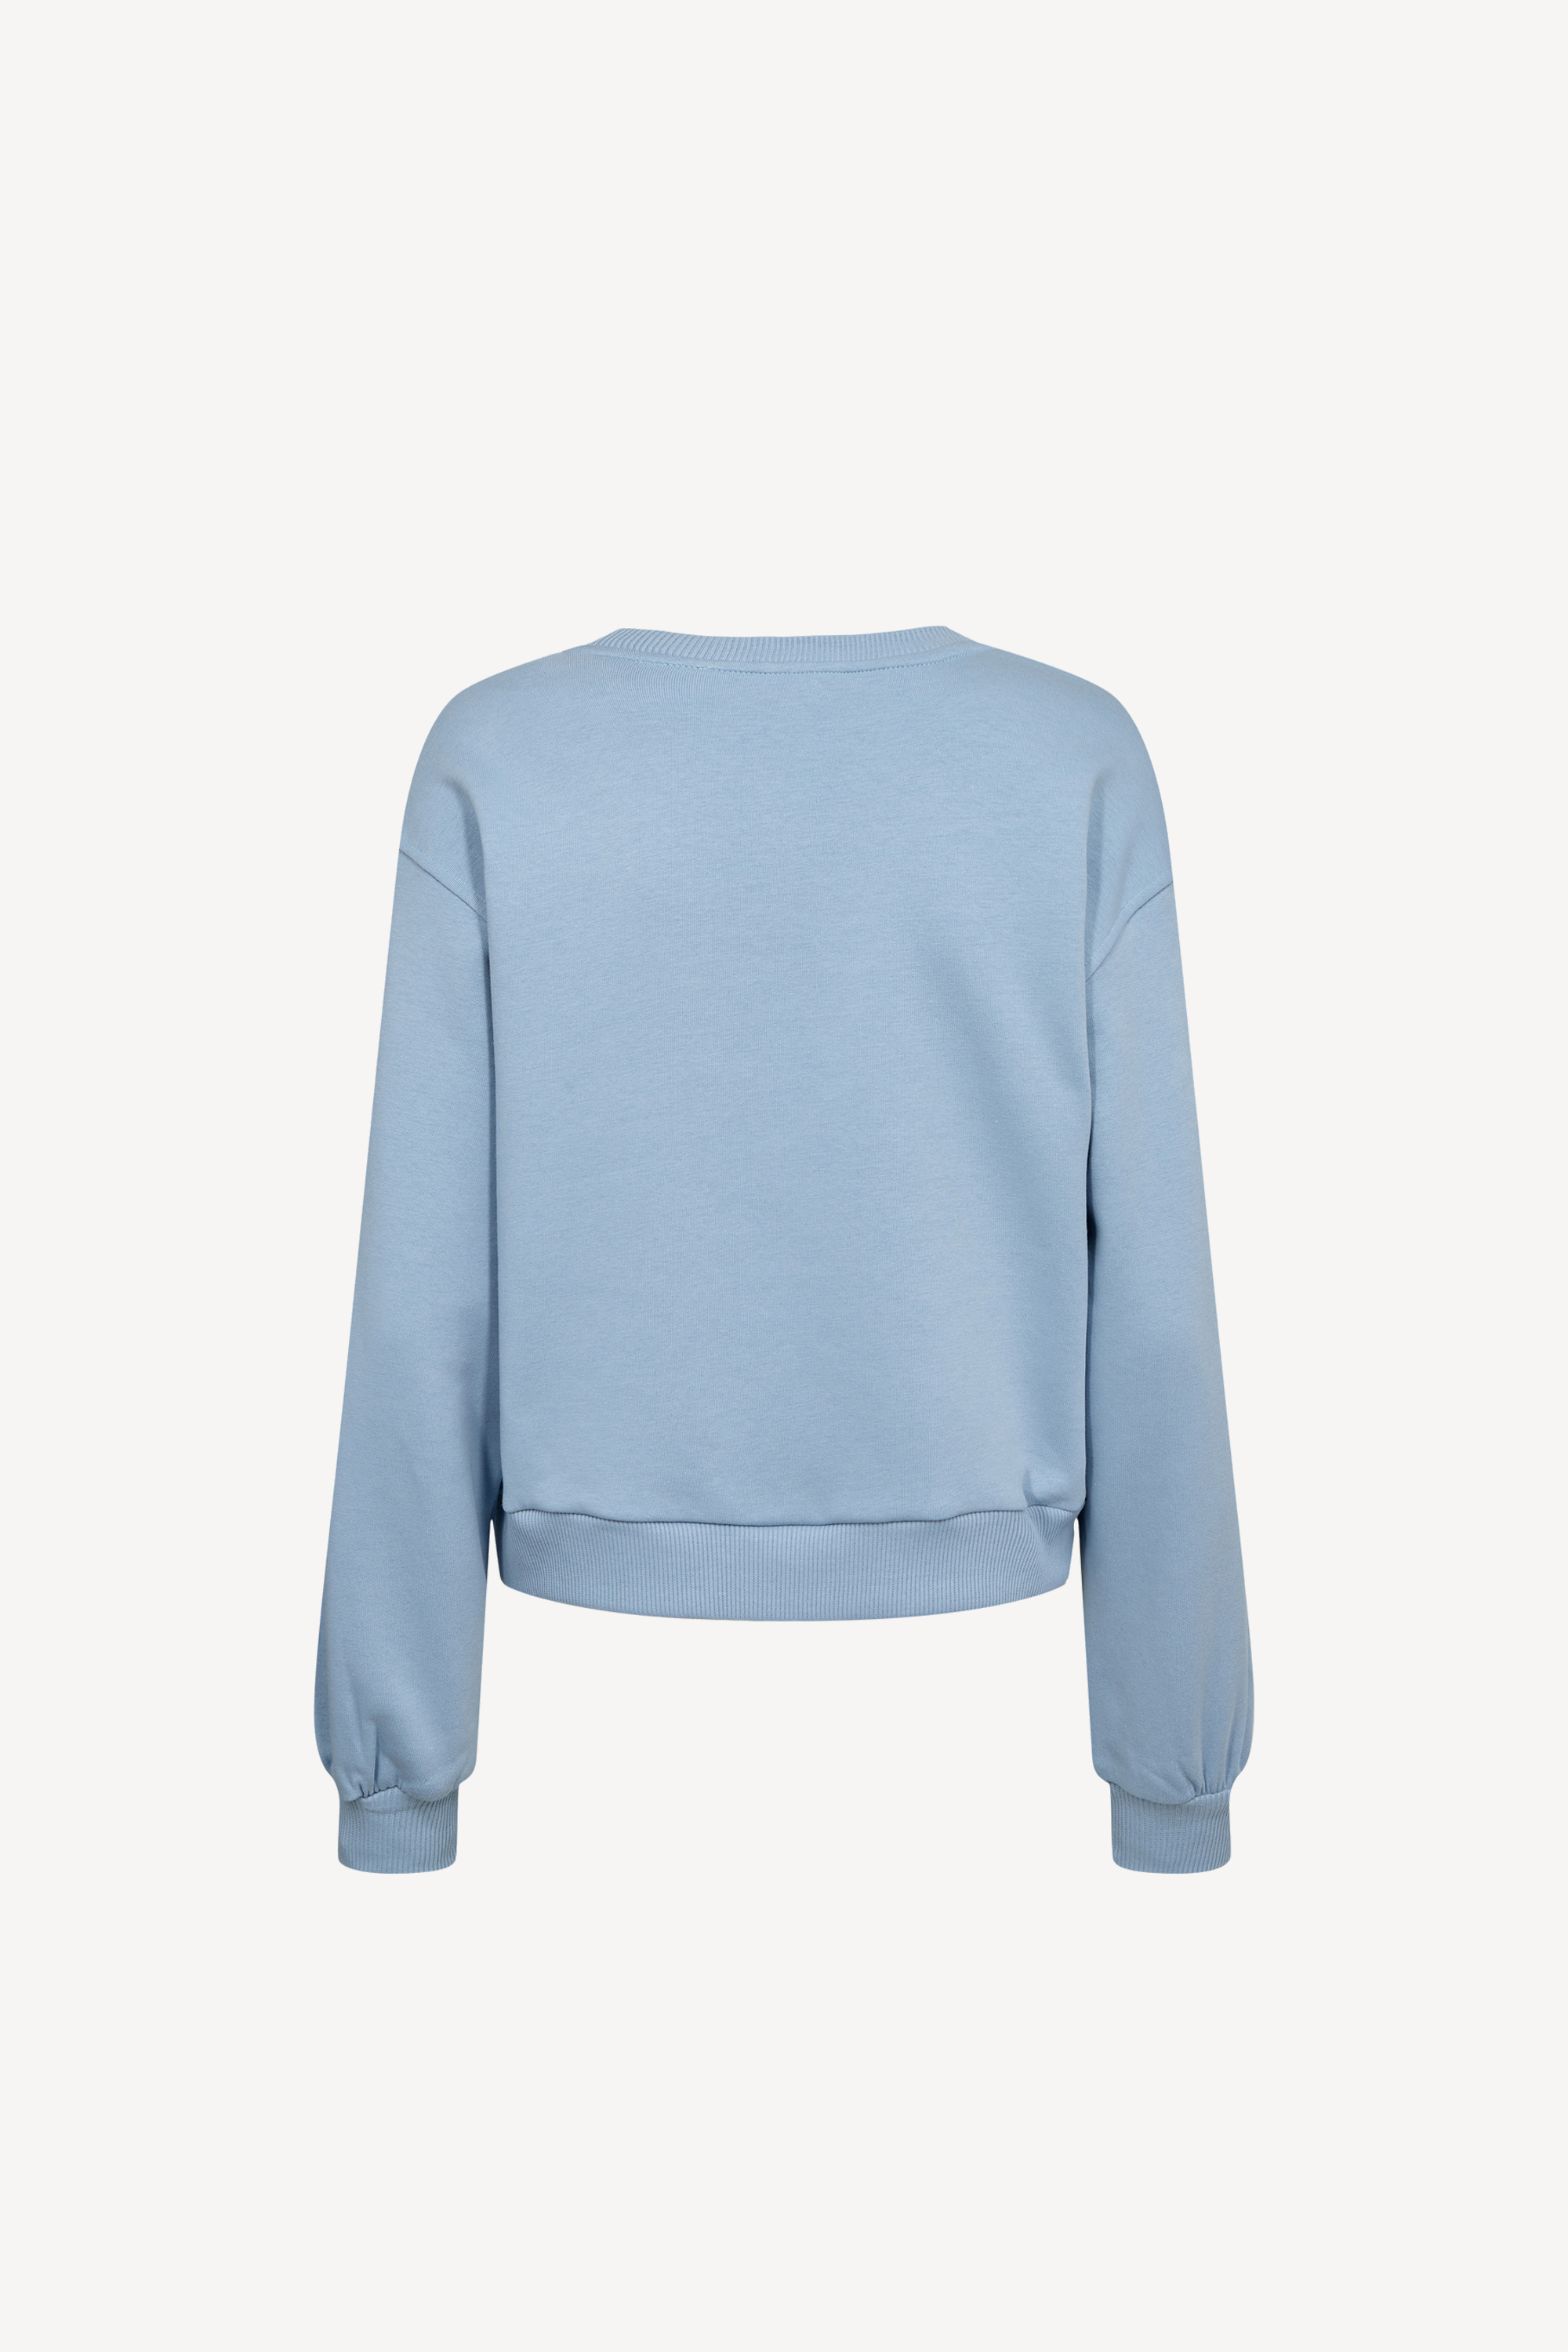 Myra Sweater Powder Blue